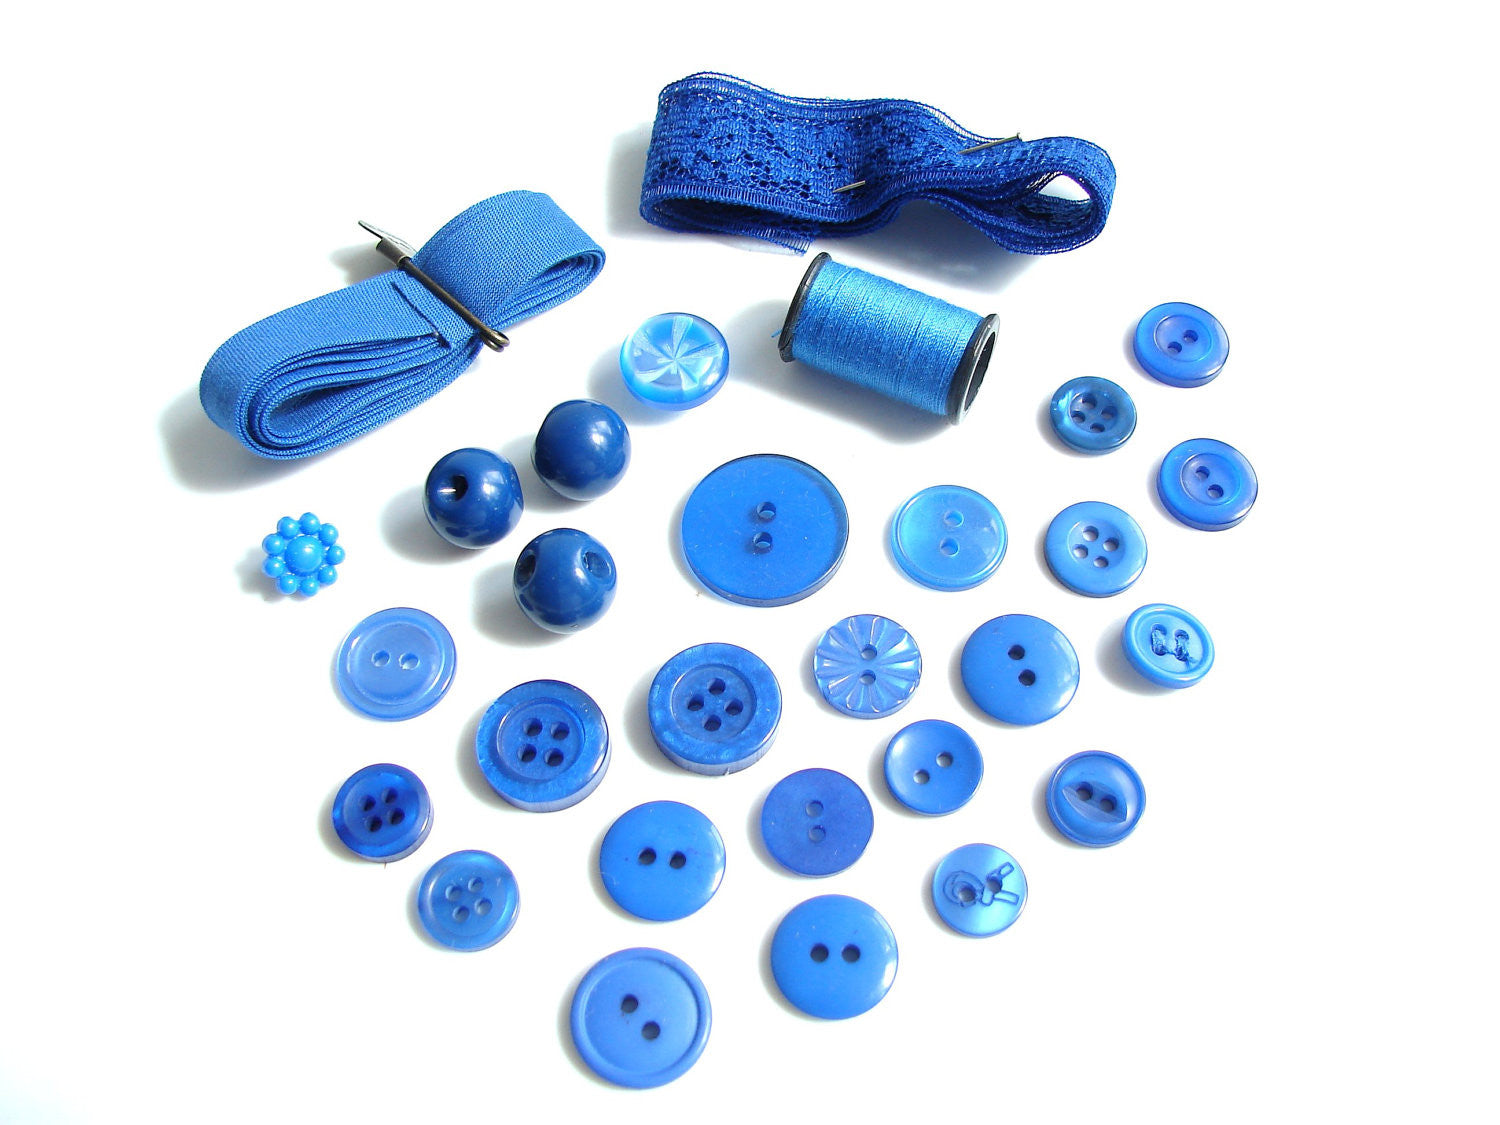 Vintage Blue Buttons, Ribbon and Lace, Blue Thread Destash Inspiration Kit  (c.1960s)